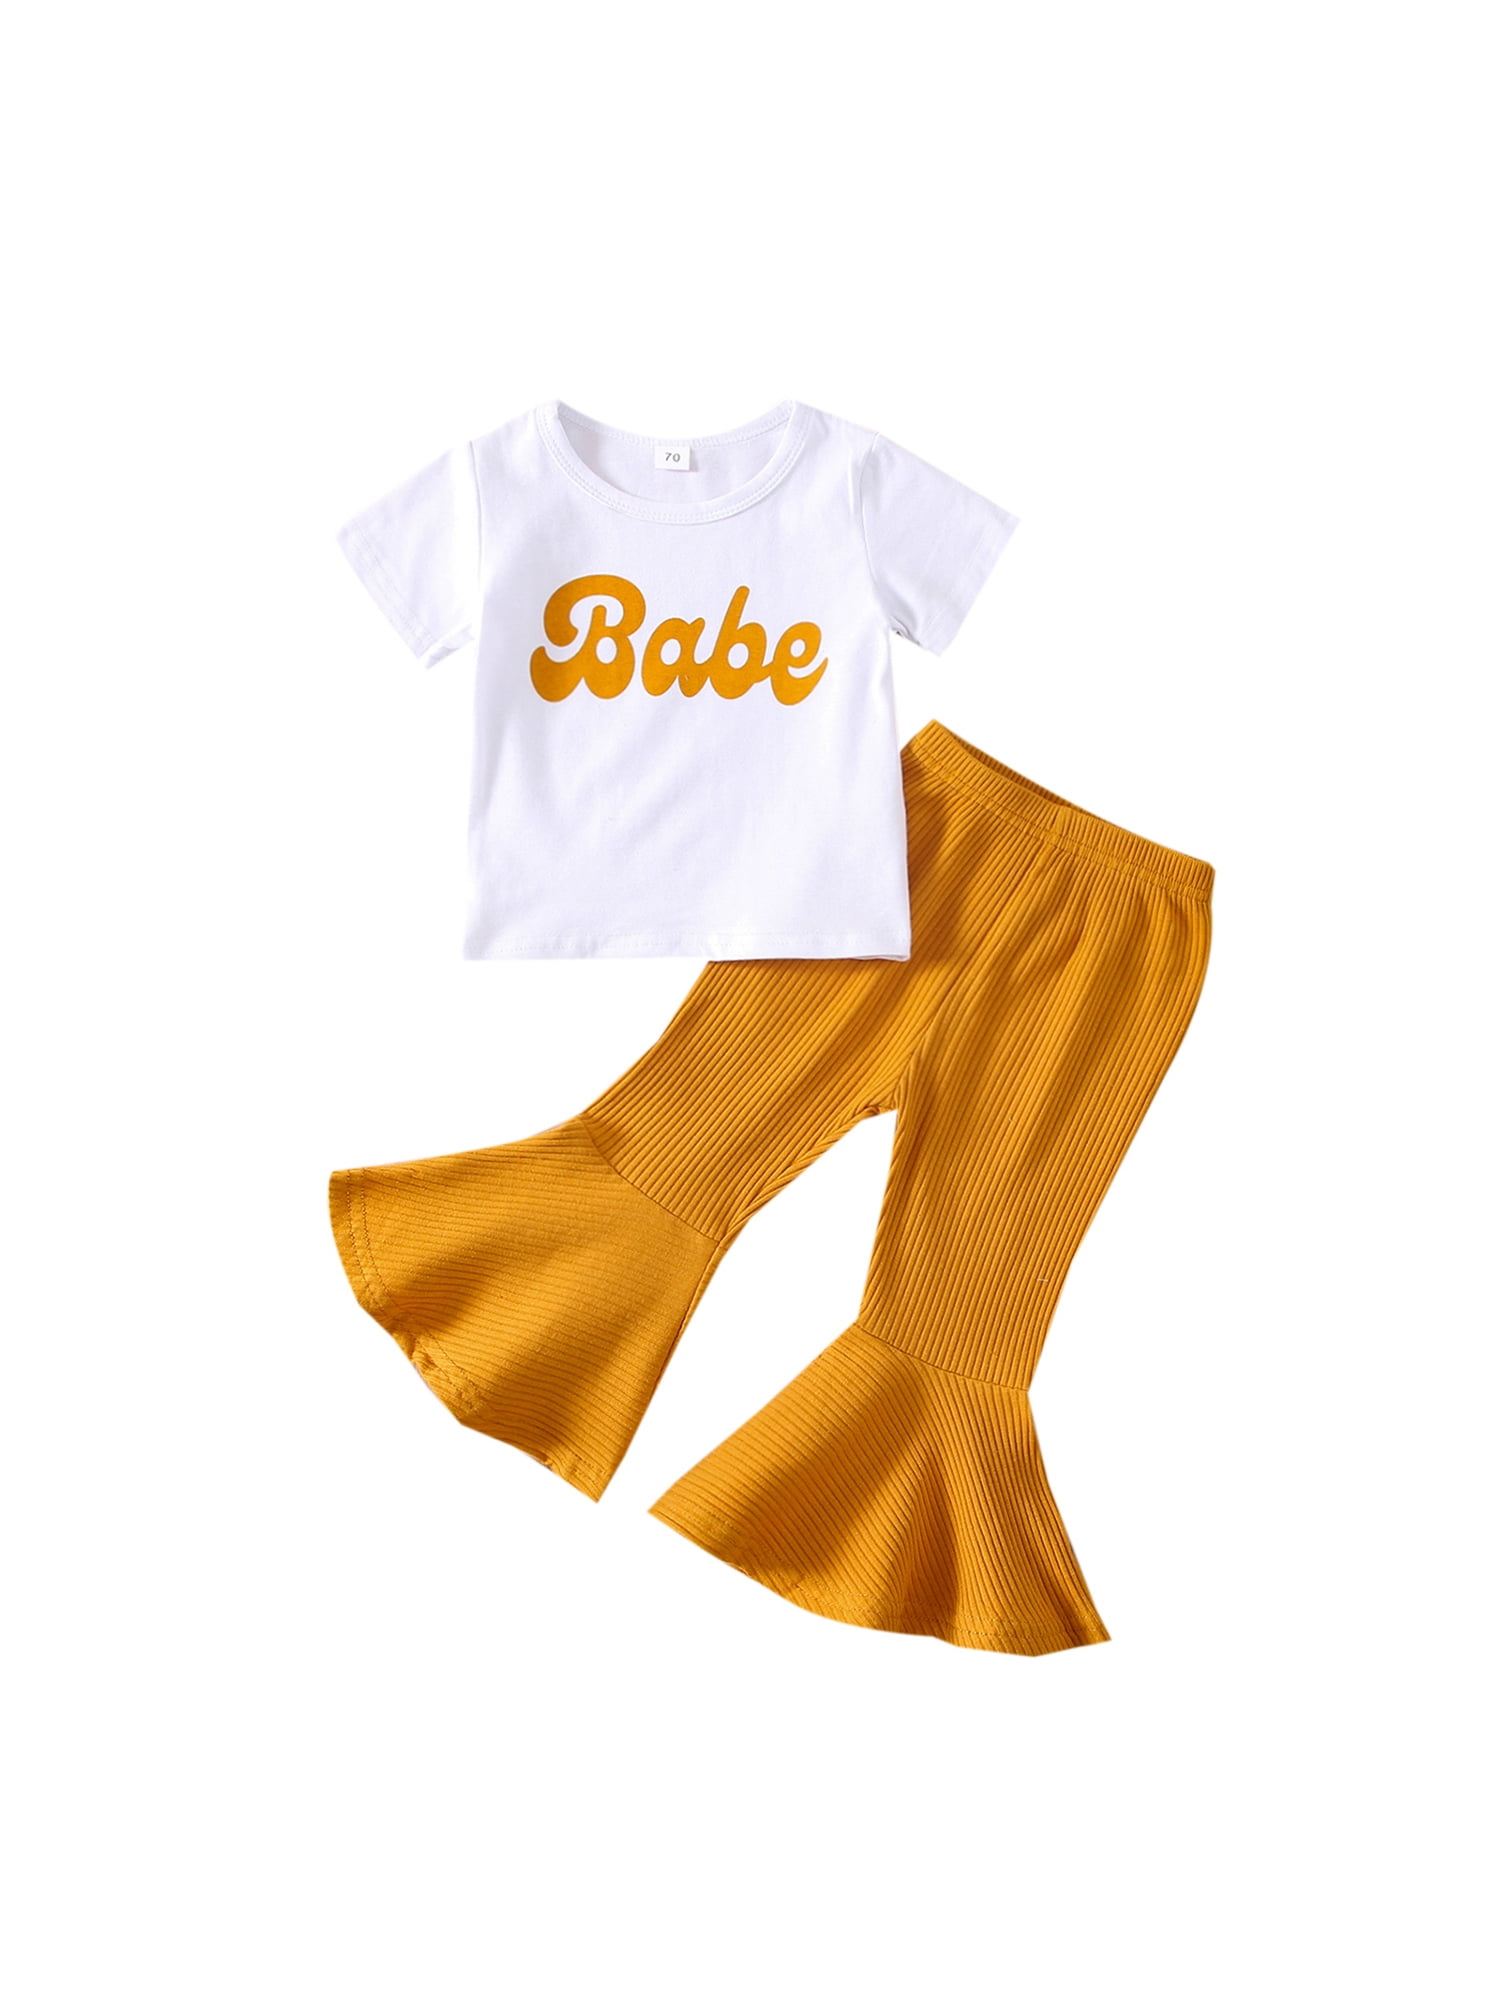 Toddler Baby Girls Summer Clothes T Shirt Tops Shorts Pants Outfits Sets 2PCS